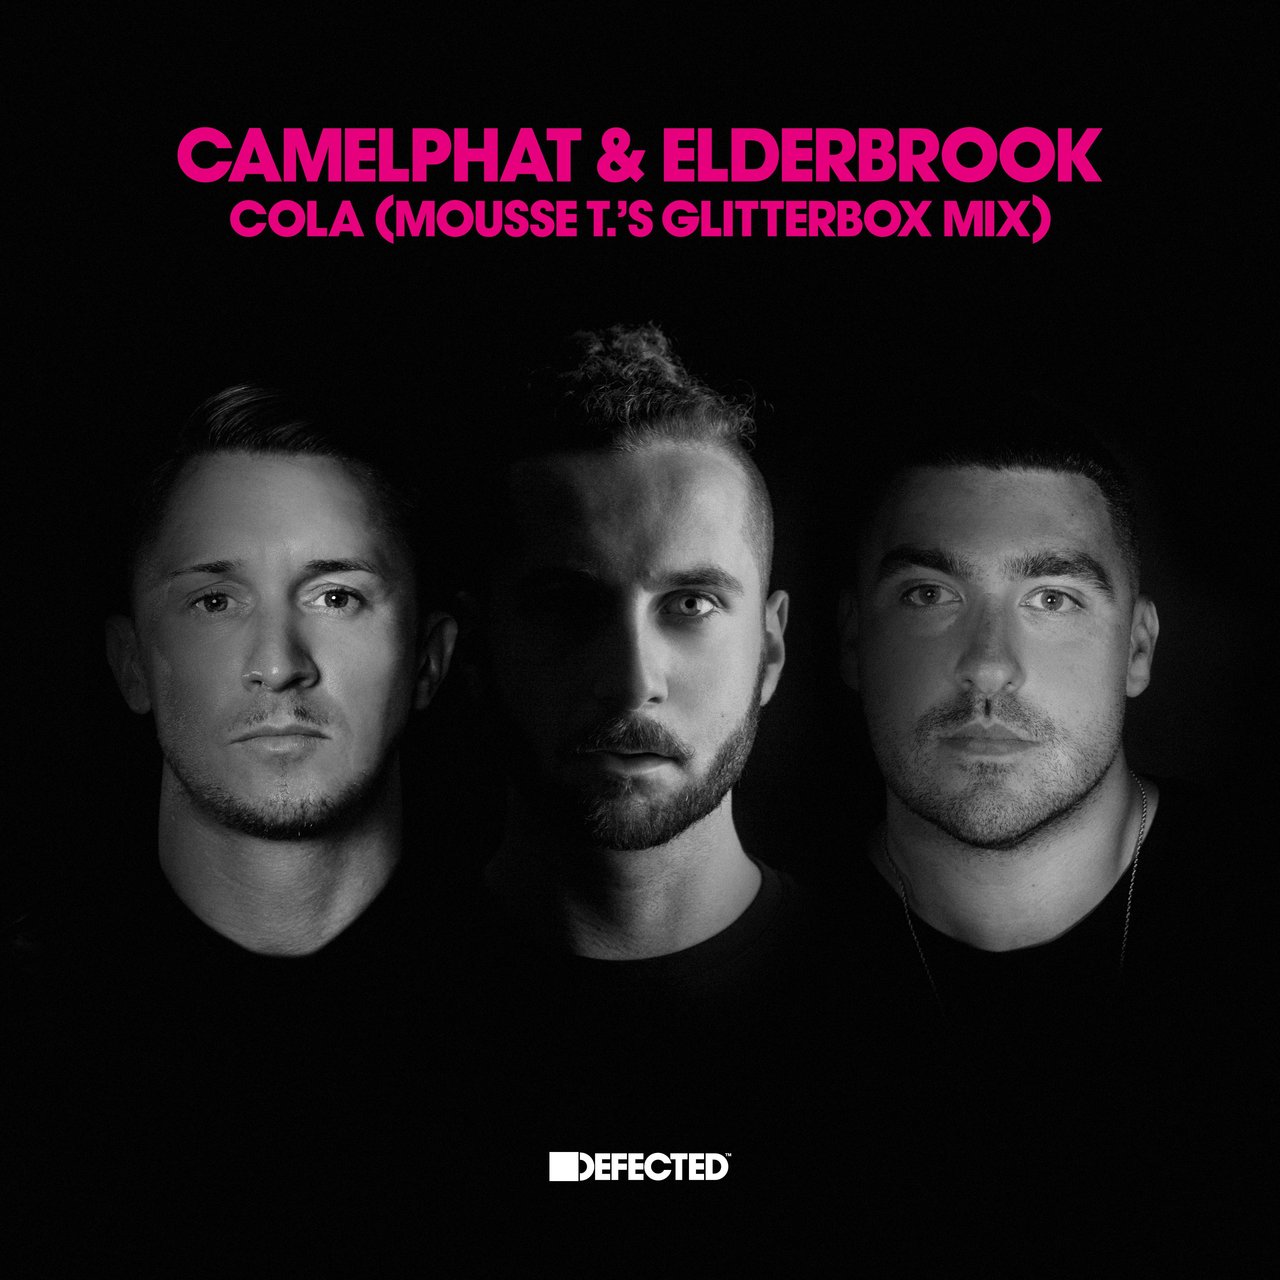 CamelPhat & Elderbrook - Cola (Mousse T.'s Glitterbox Mix) / Defected